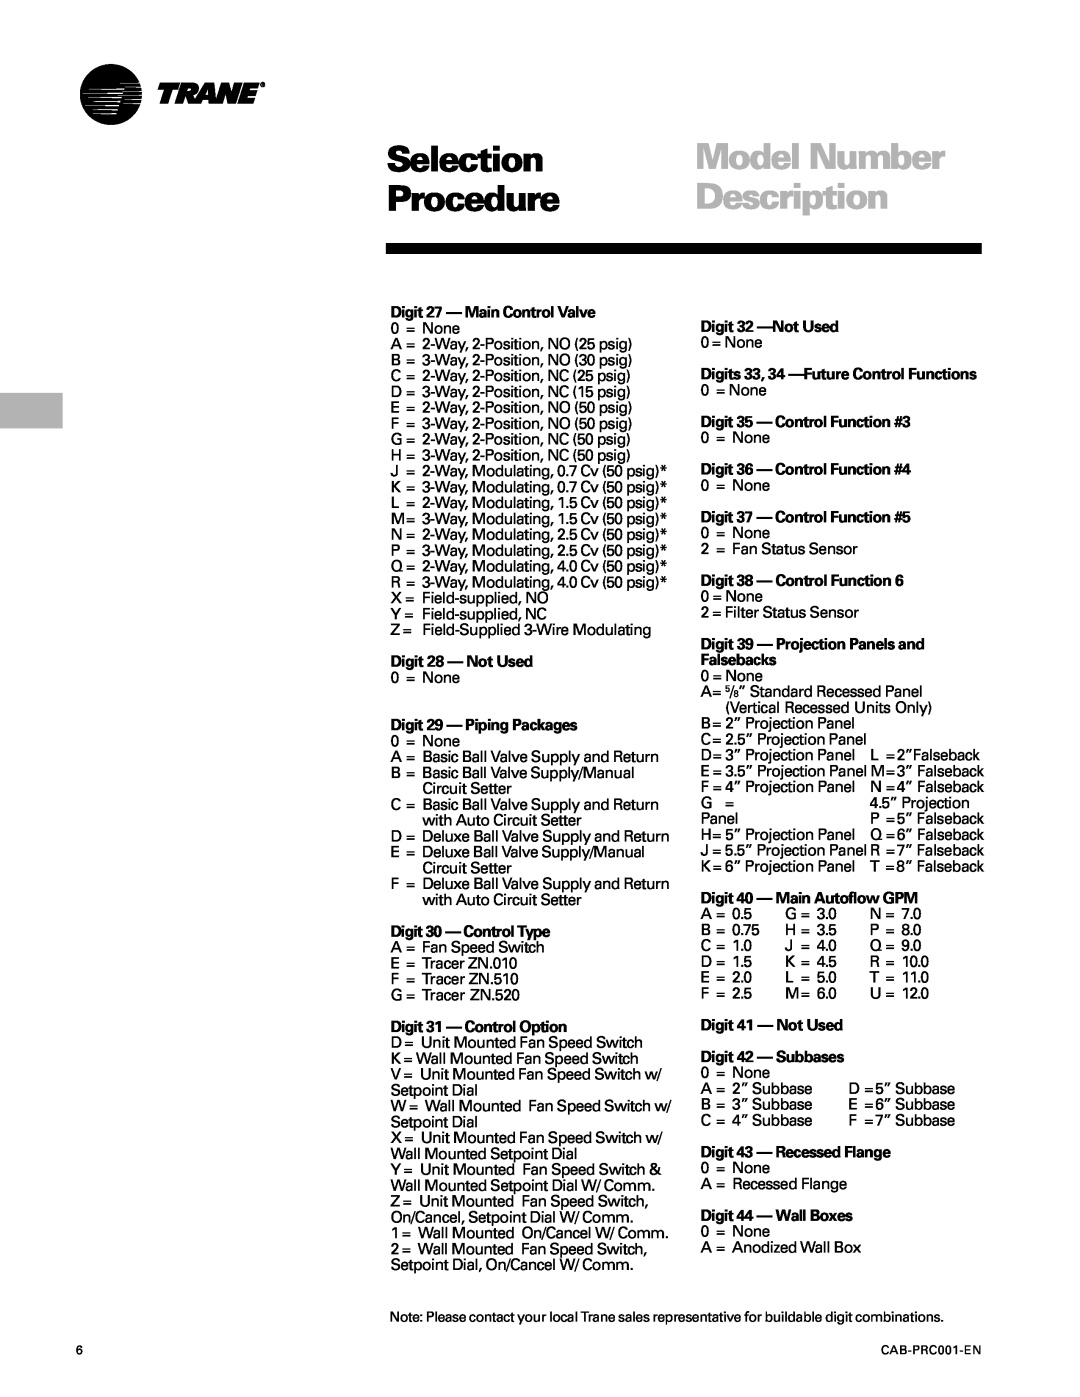 Trane CAB-PRC001-EN manual Selection, Model Number, Procedure, Description, Digit 27 - Main Control Valve 